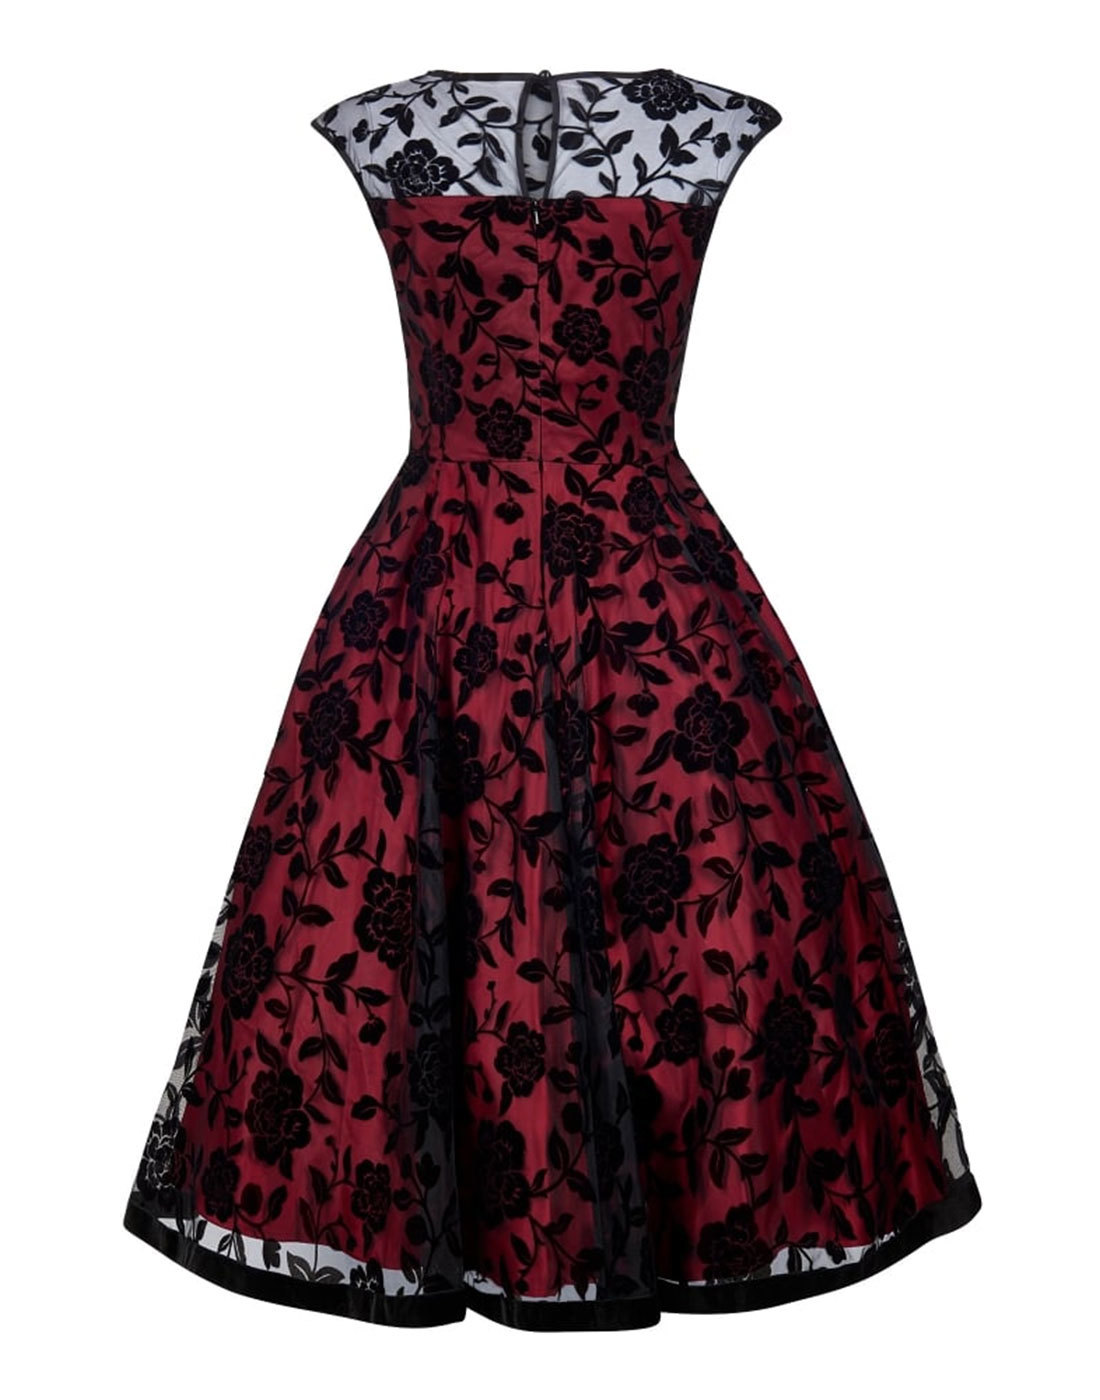 COLLECTIF VINTAGE Faye 1950s Velvet Brocade Rose Swing Dress Red